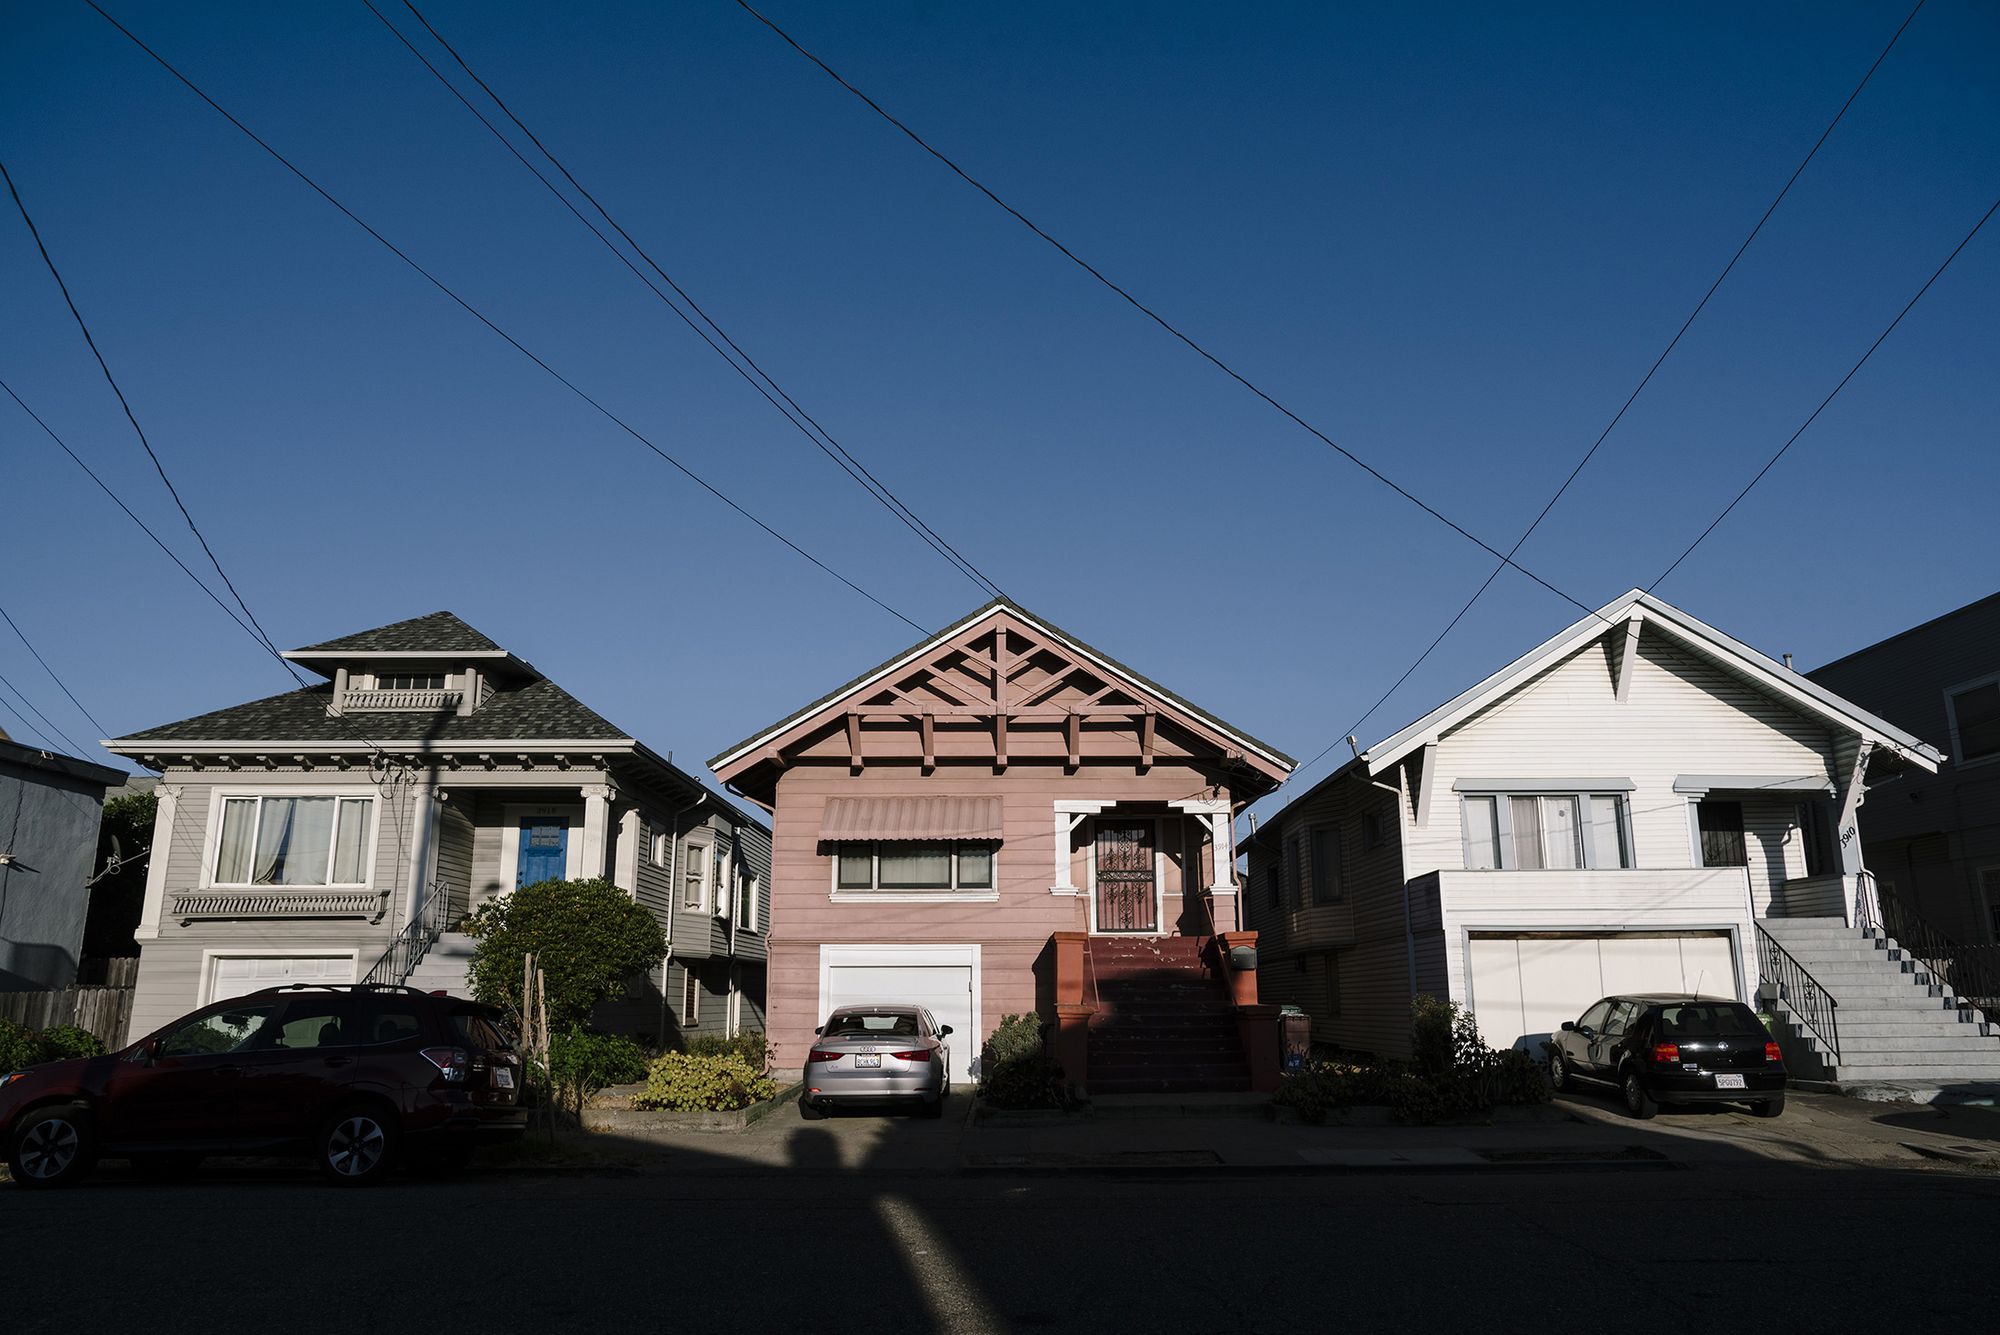 How California Became America’s Housing Market Nightmare